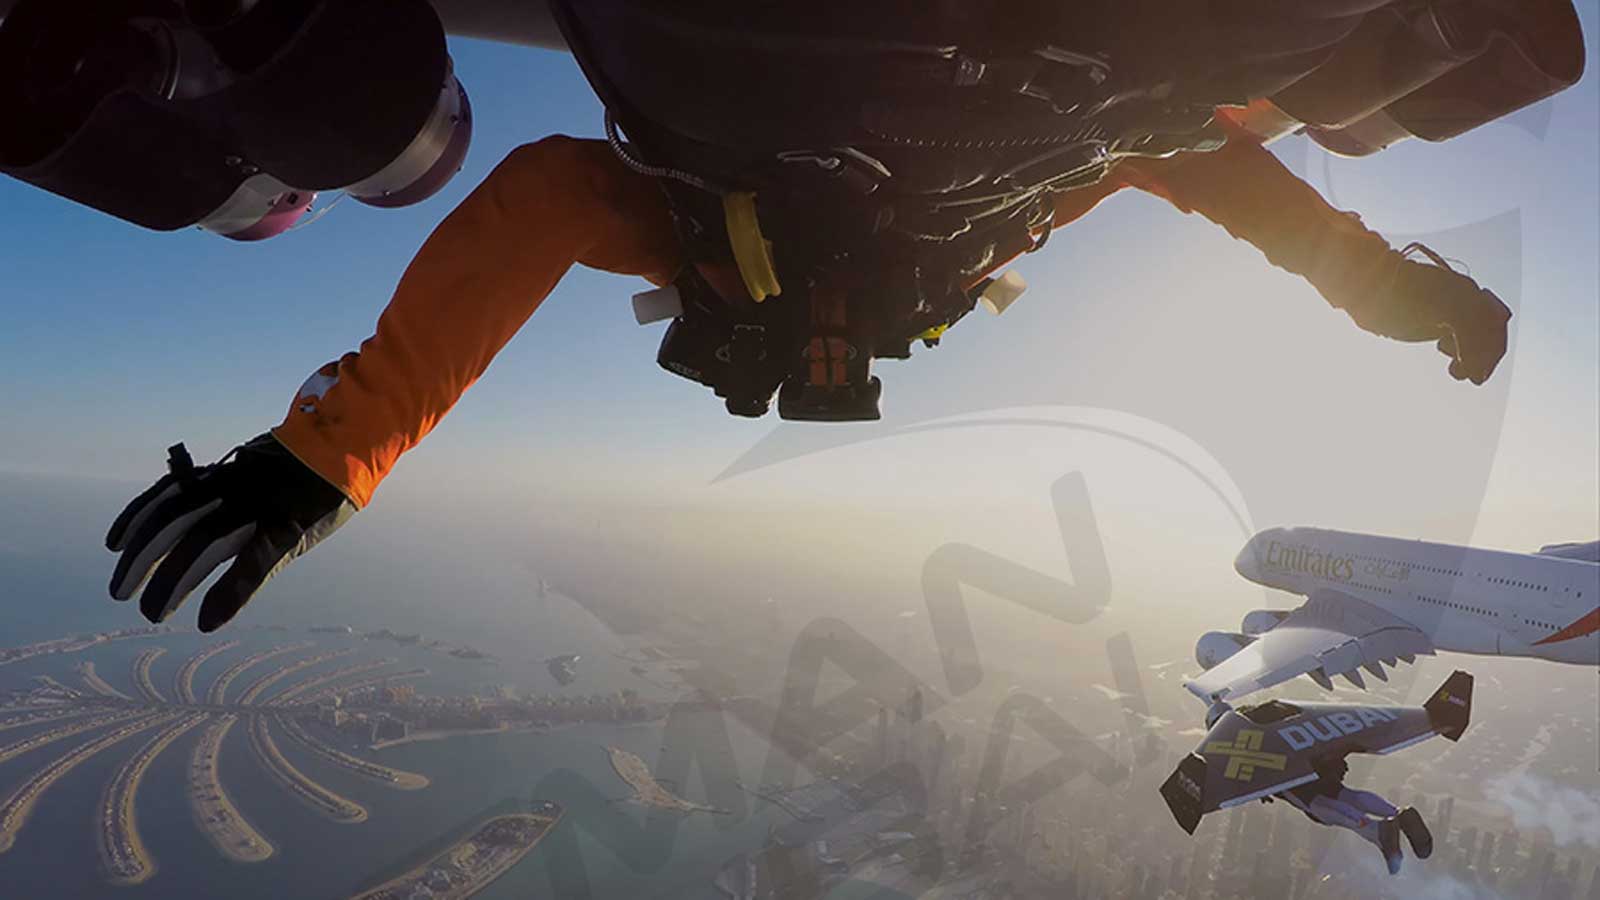 Jetpacks get an upgrade with Jetman Dubai's groundbreaking new  demonstration